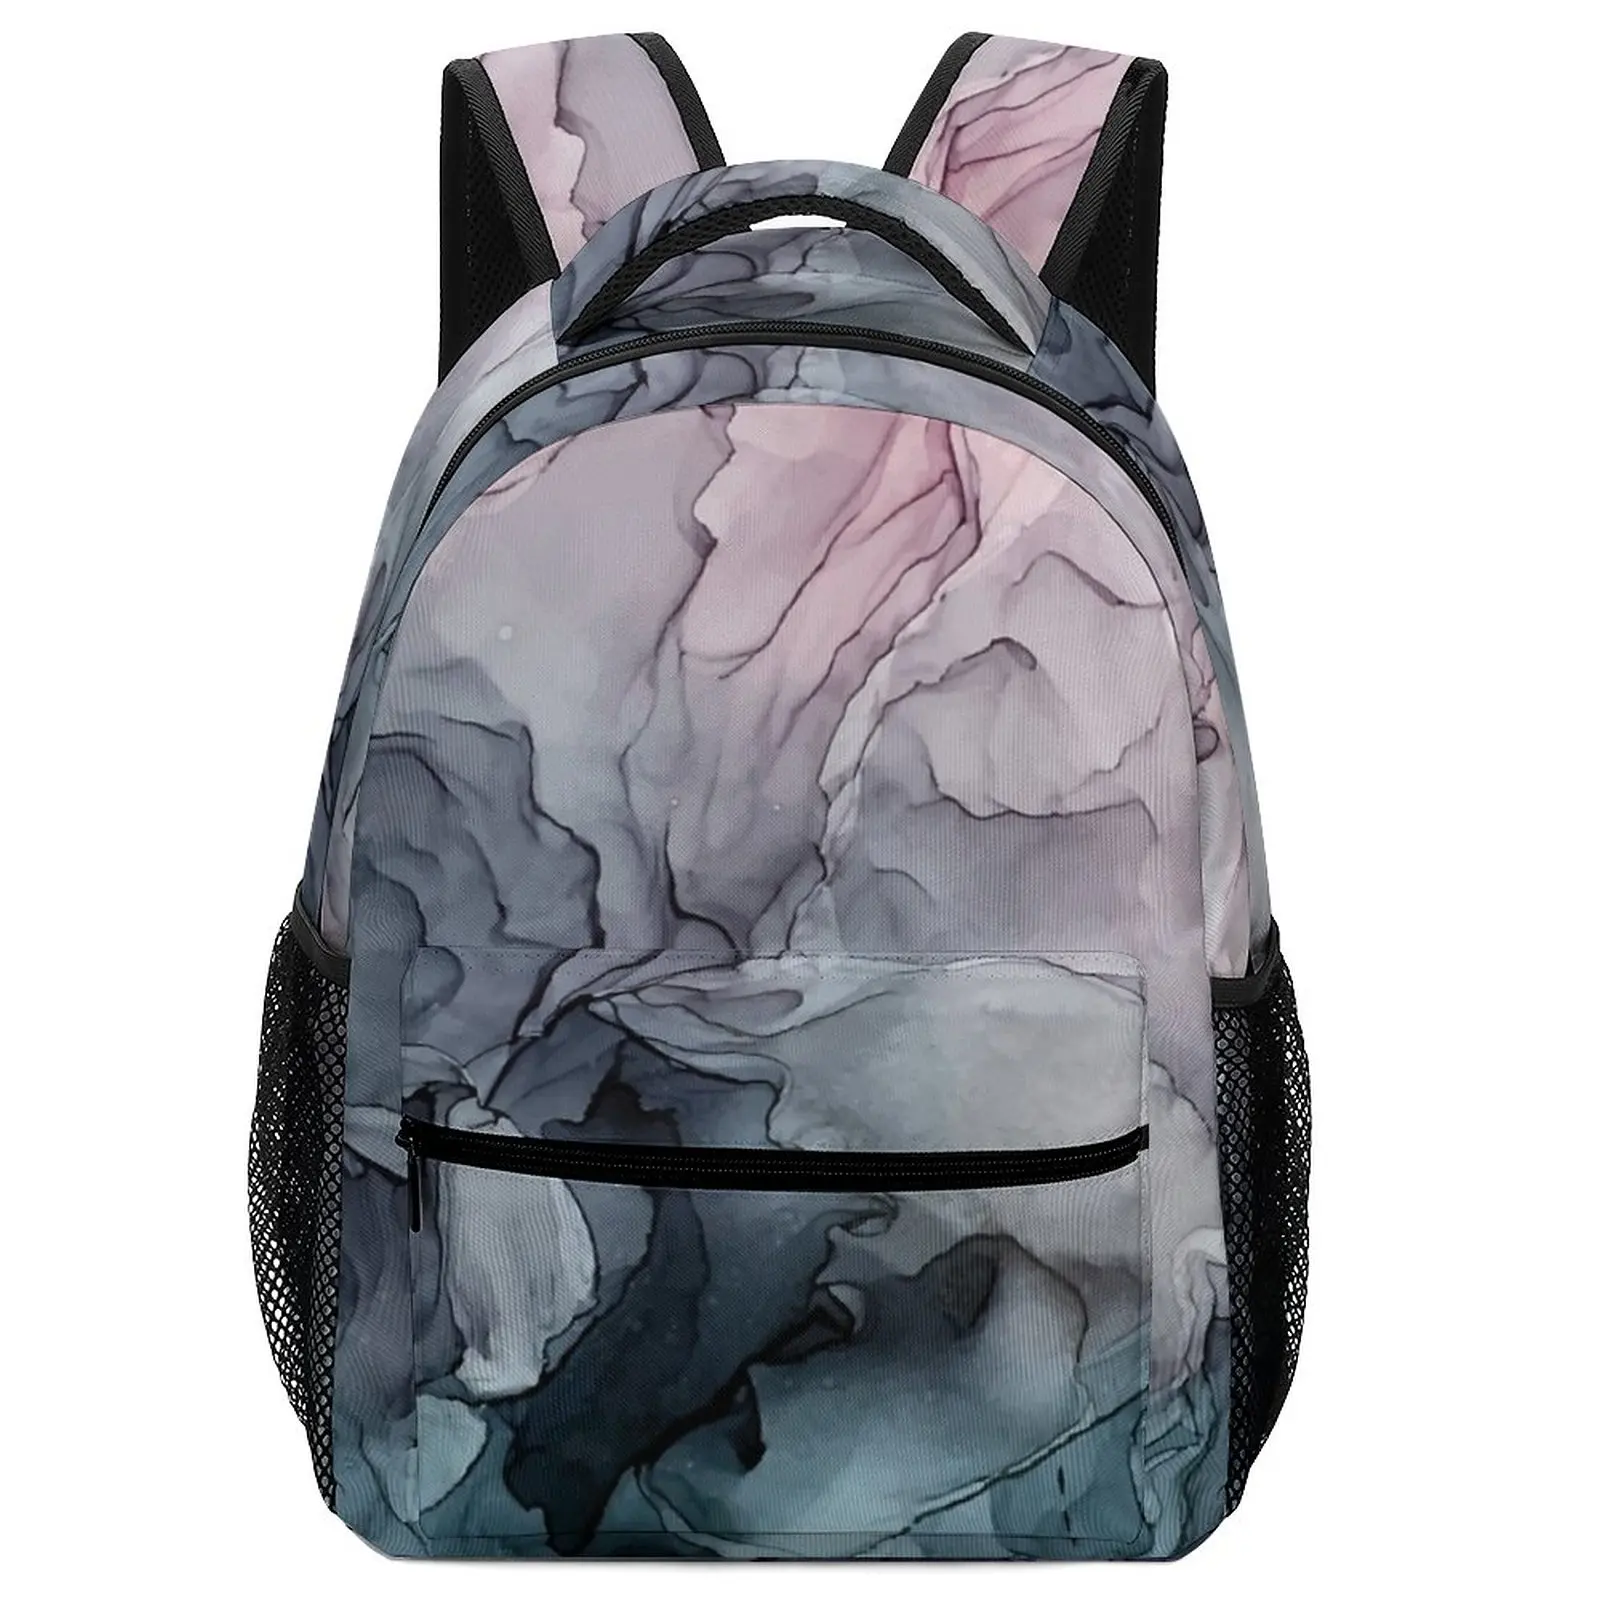 New Fashion Fun Blush And Payne's Grey Flowing Abstract Painting Kids Girls University Bag Woman Women Bags Kawaii Backpack